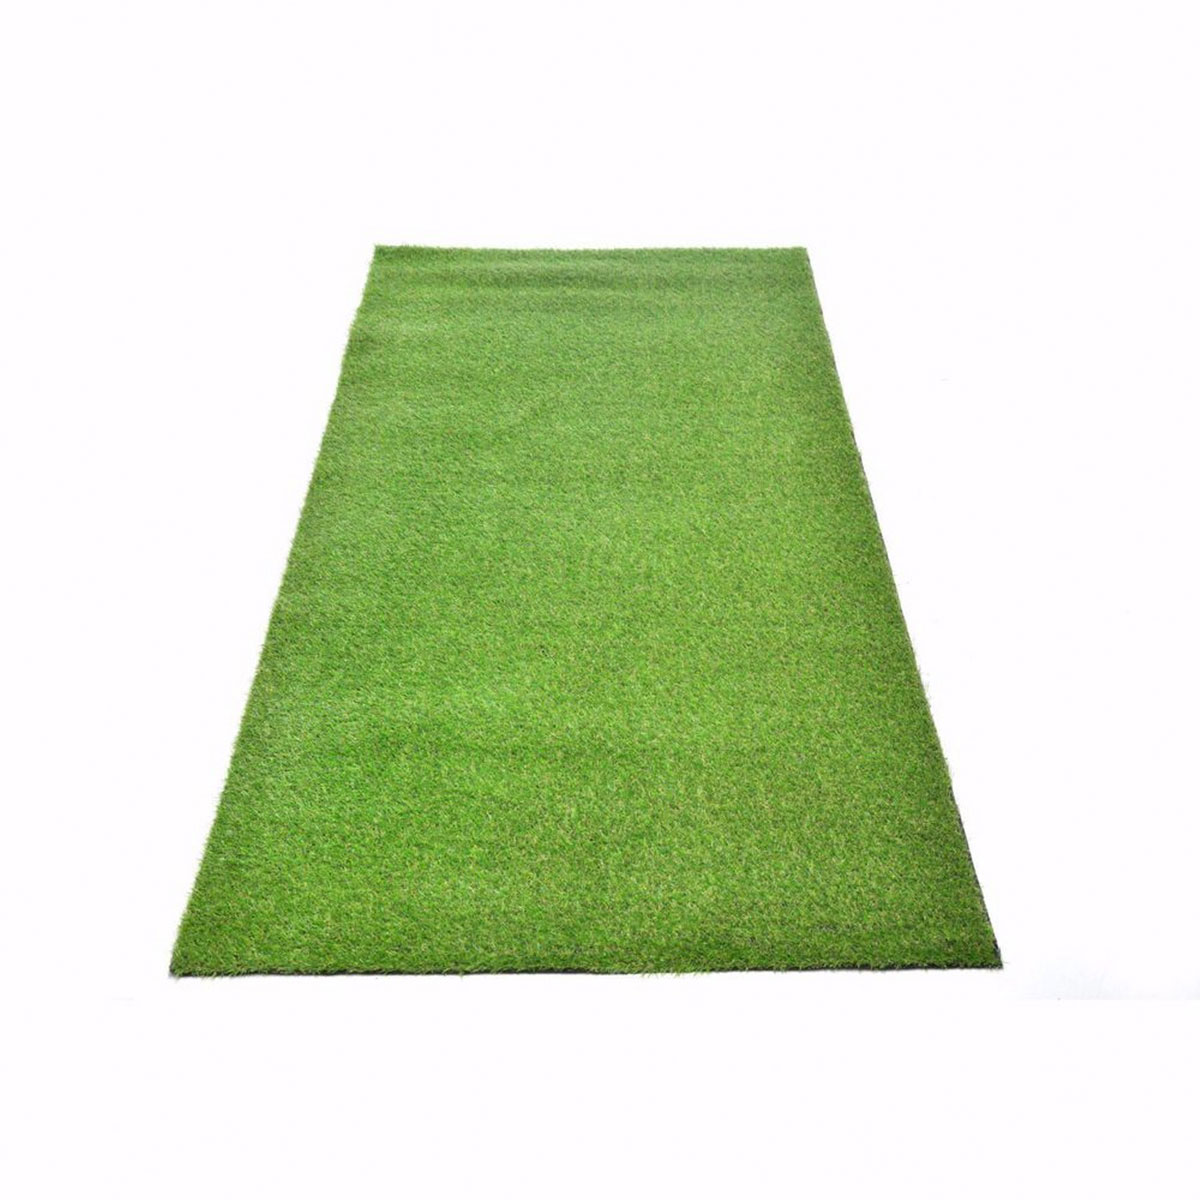 Awon Kunststoff-Rasen grün, 1x3 m